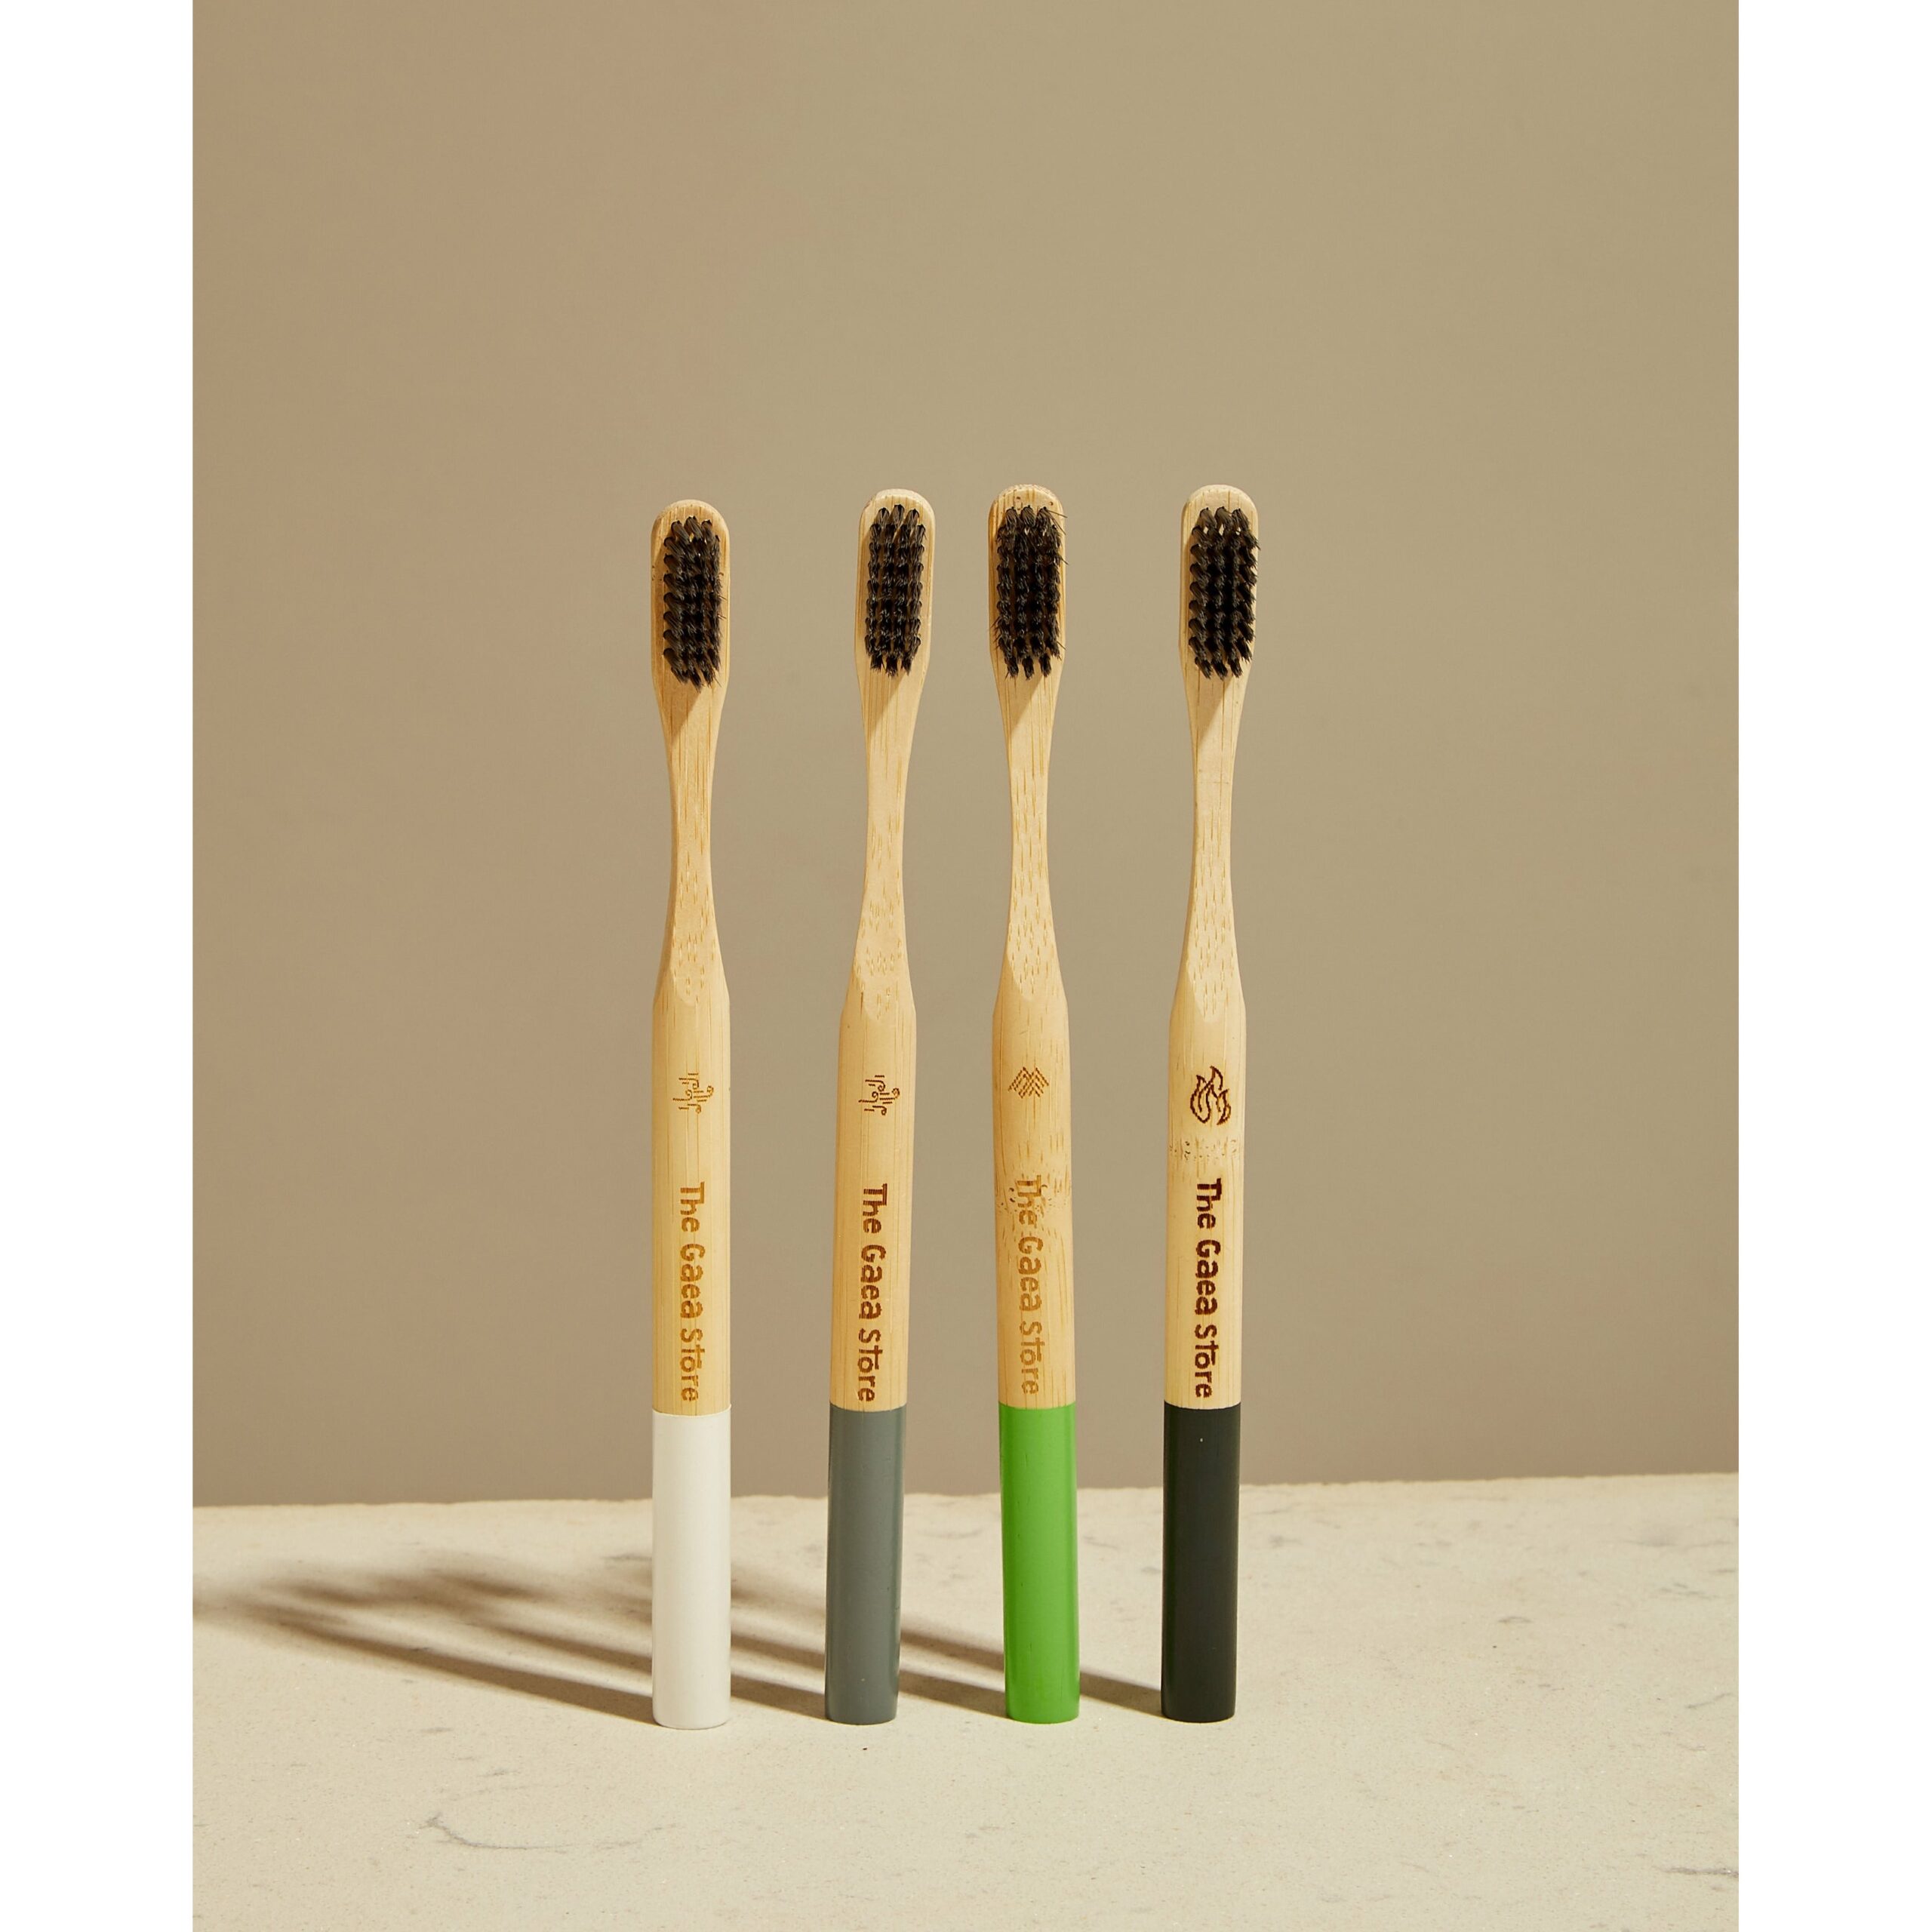 Product: The Gaea Store Premium Bamboo Toothbrush – Pack of 2